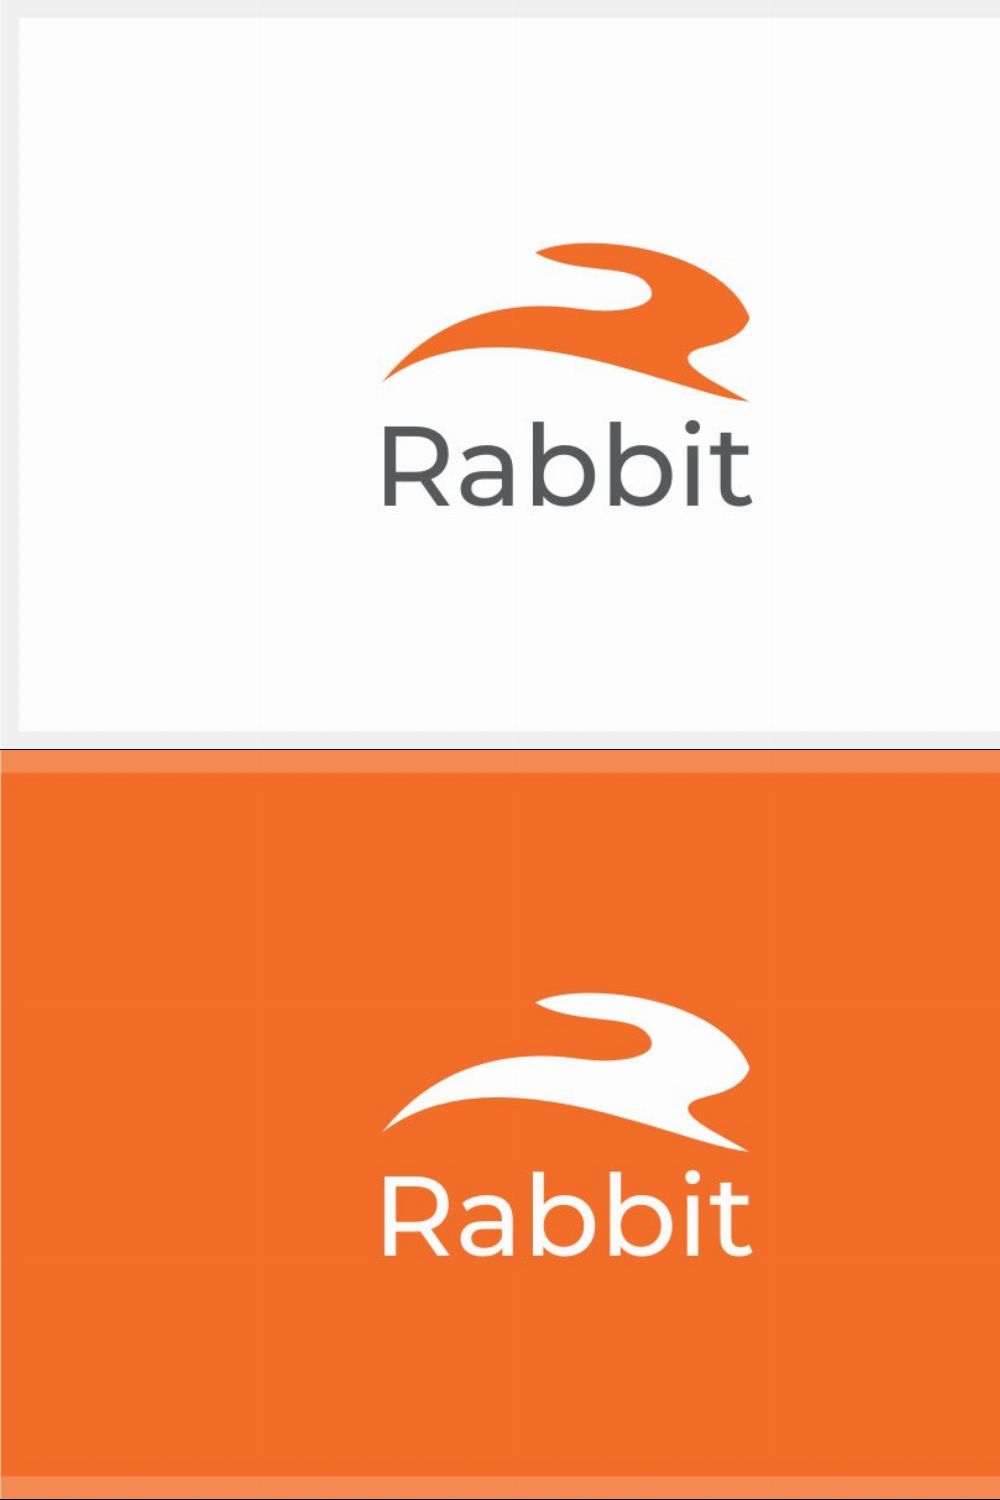 Rabbit Jump Logo pinterest preview image.